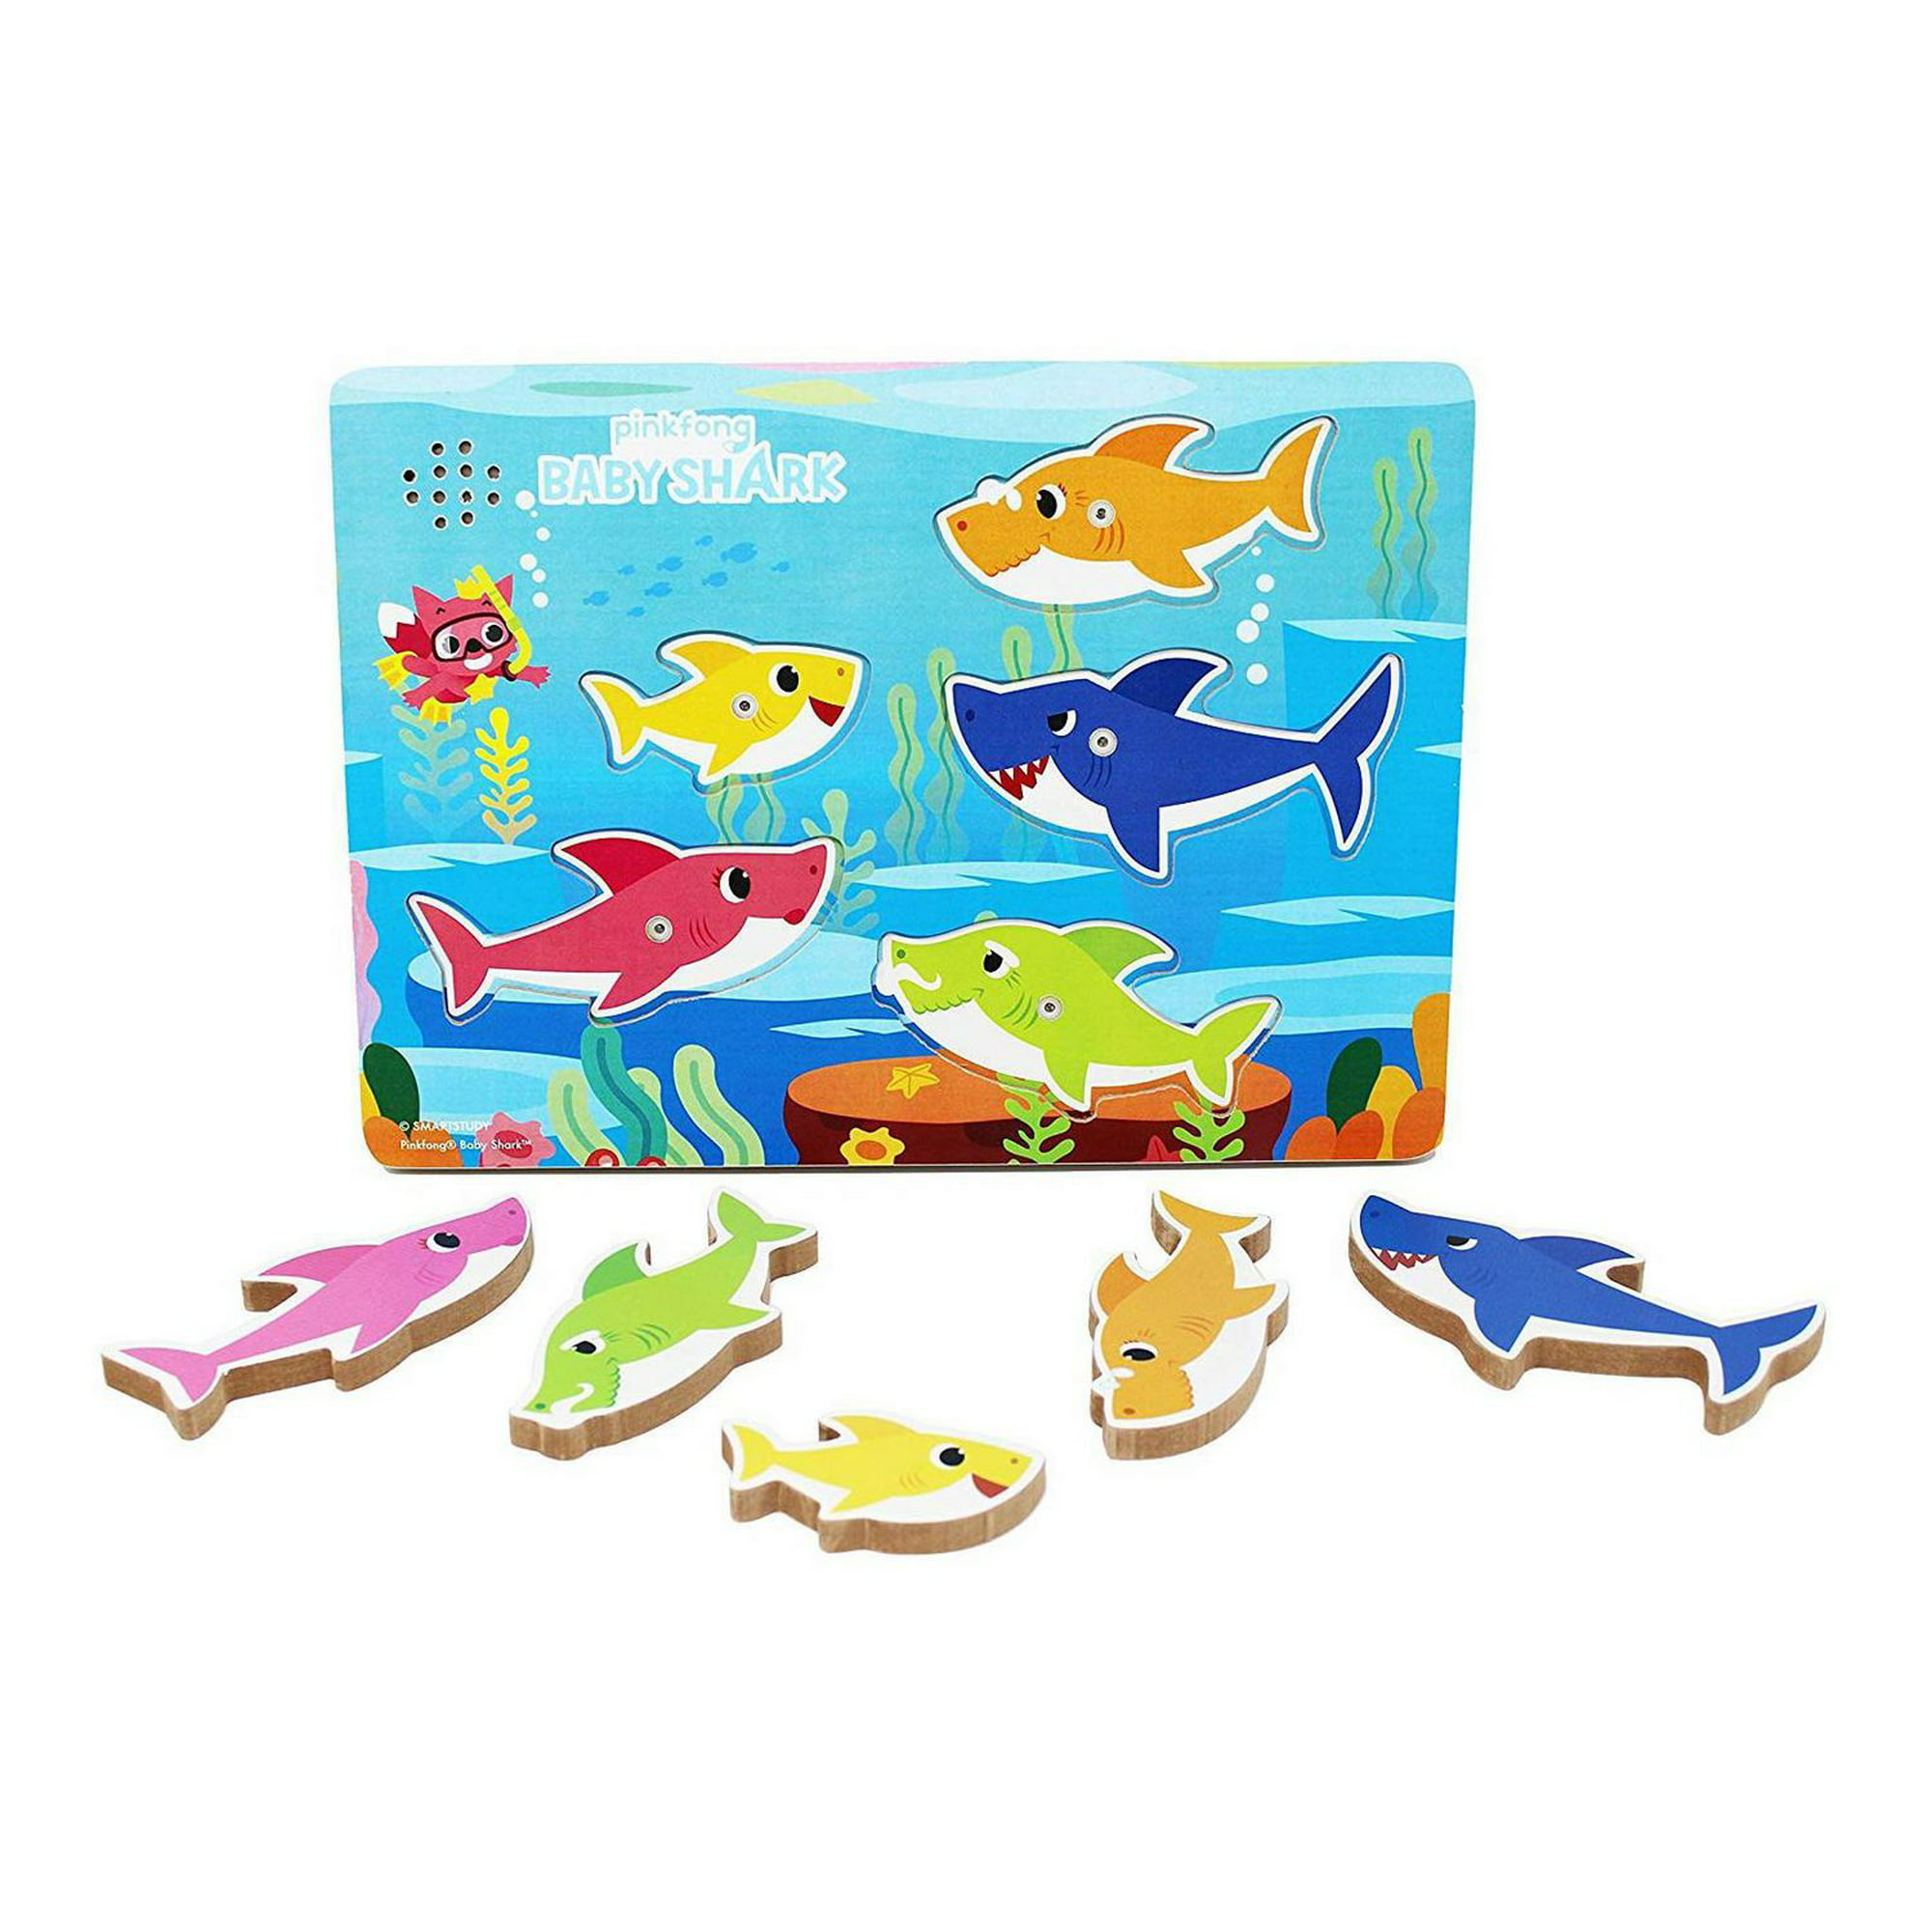 Cardinal Games Pinkfong Baby Shark Fishing Game and Memory Match Bundle